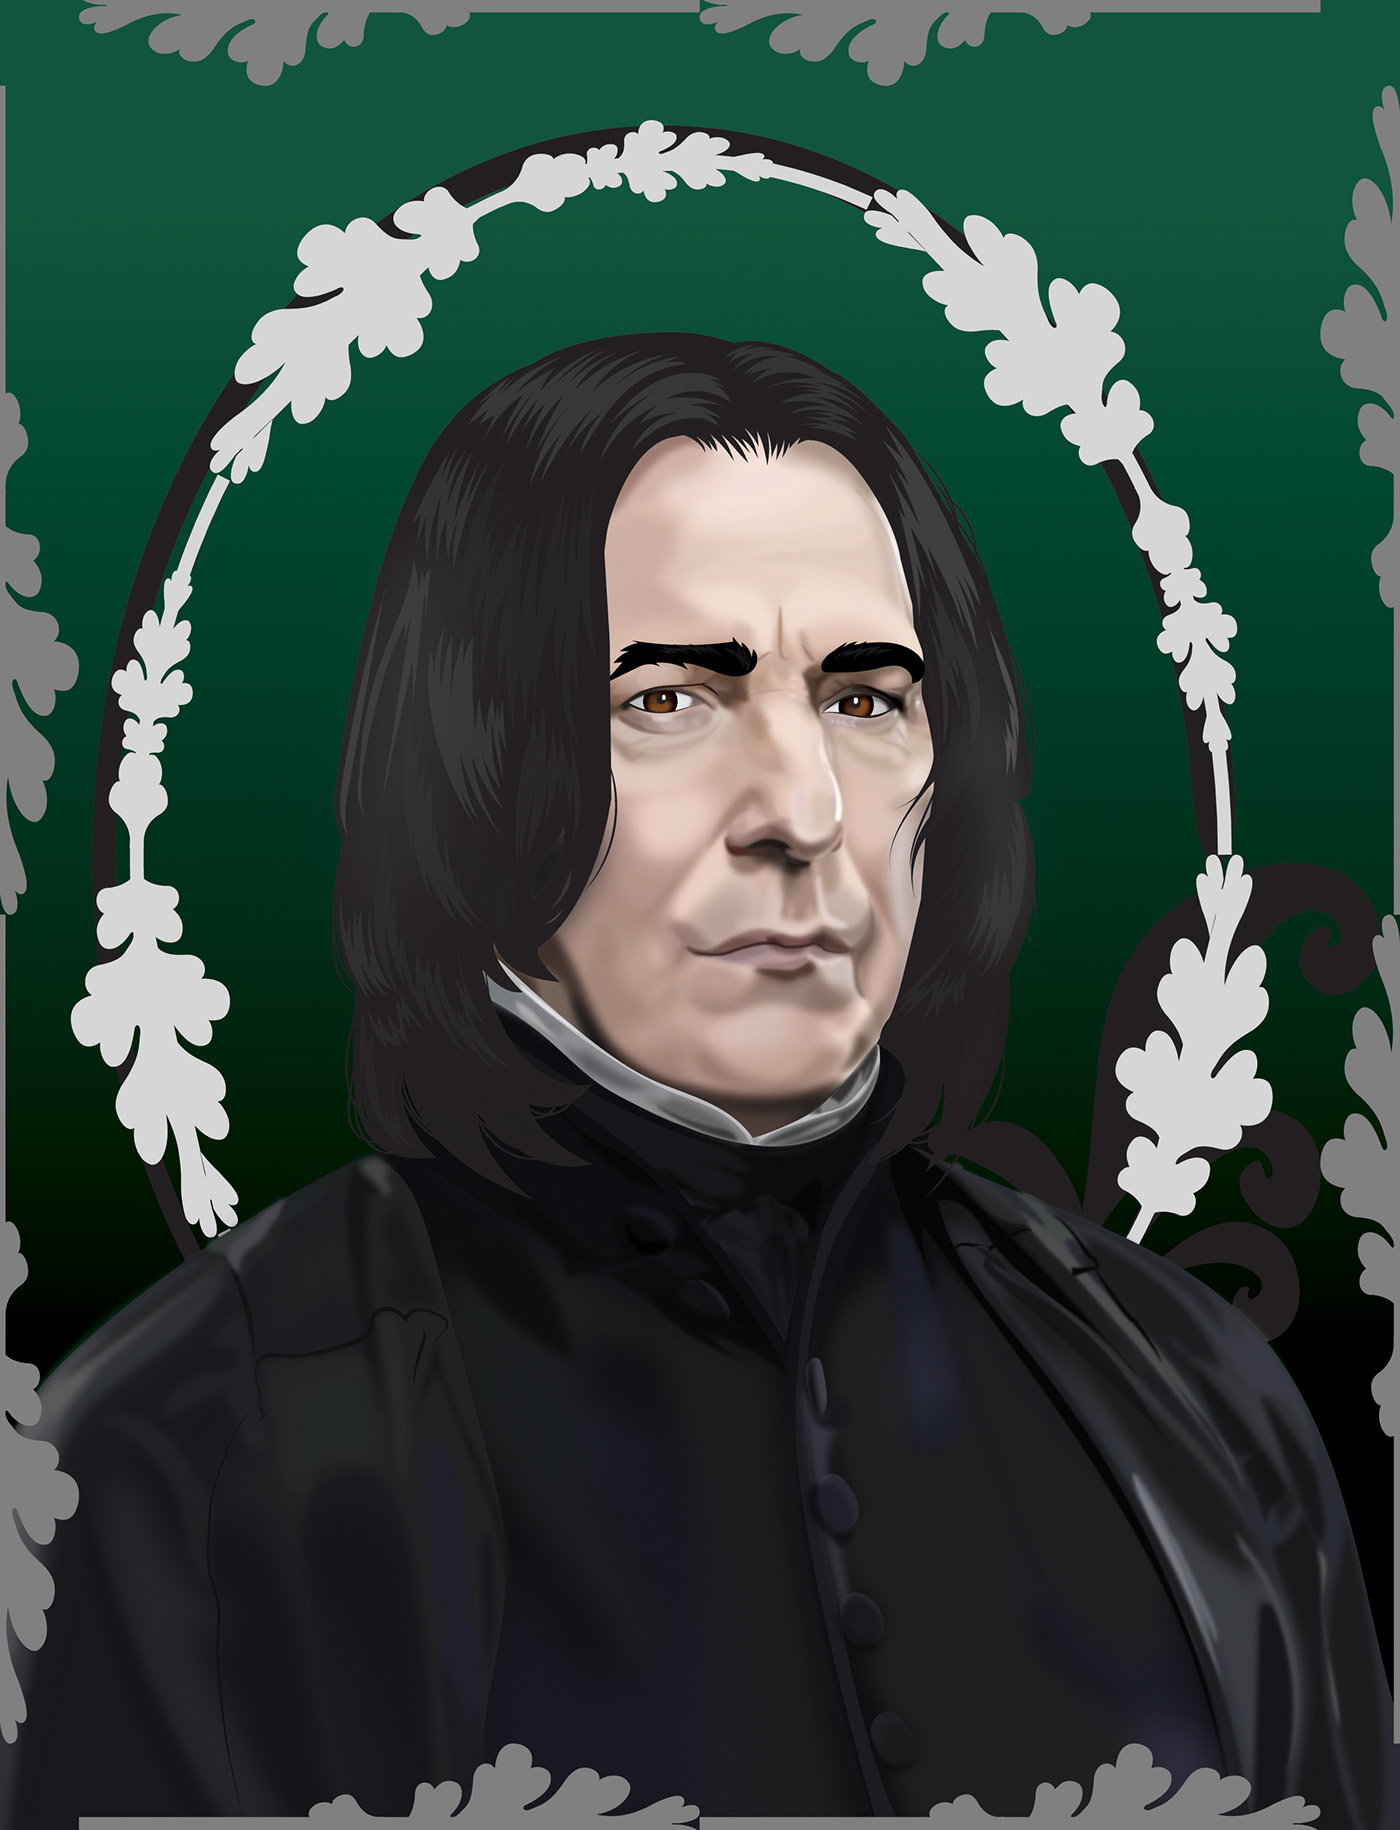 Harry Potter 'Professor Snape' vector portrait on Behance